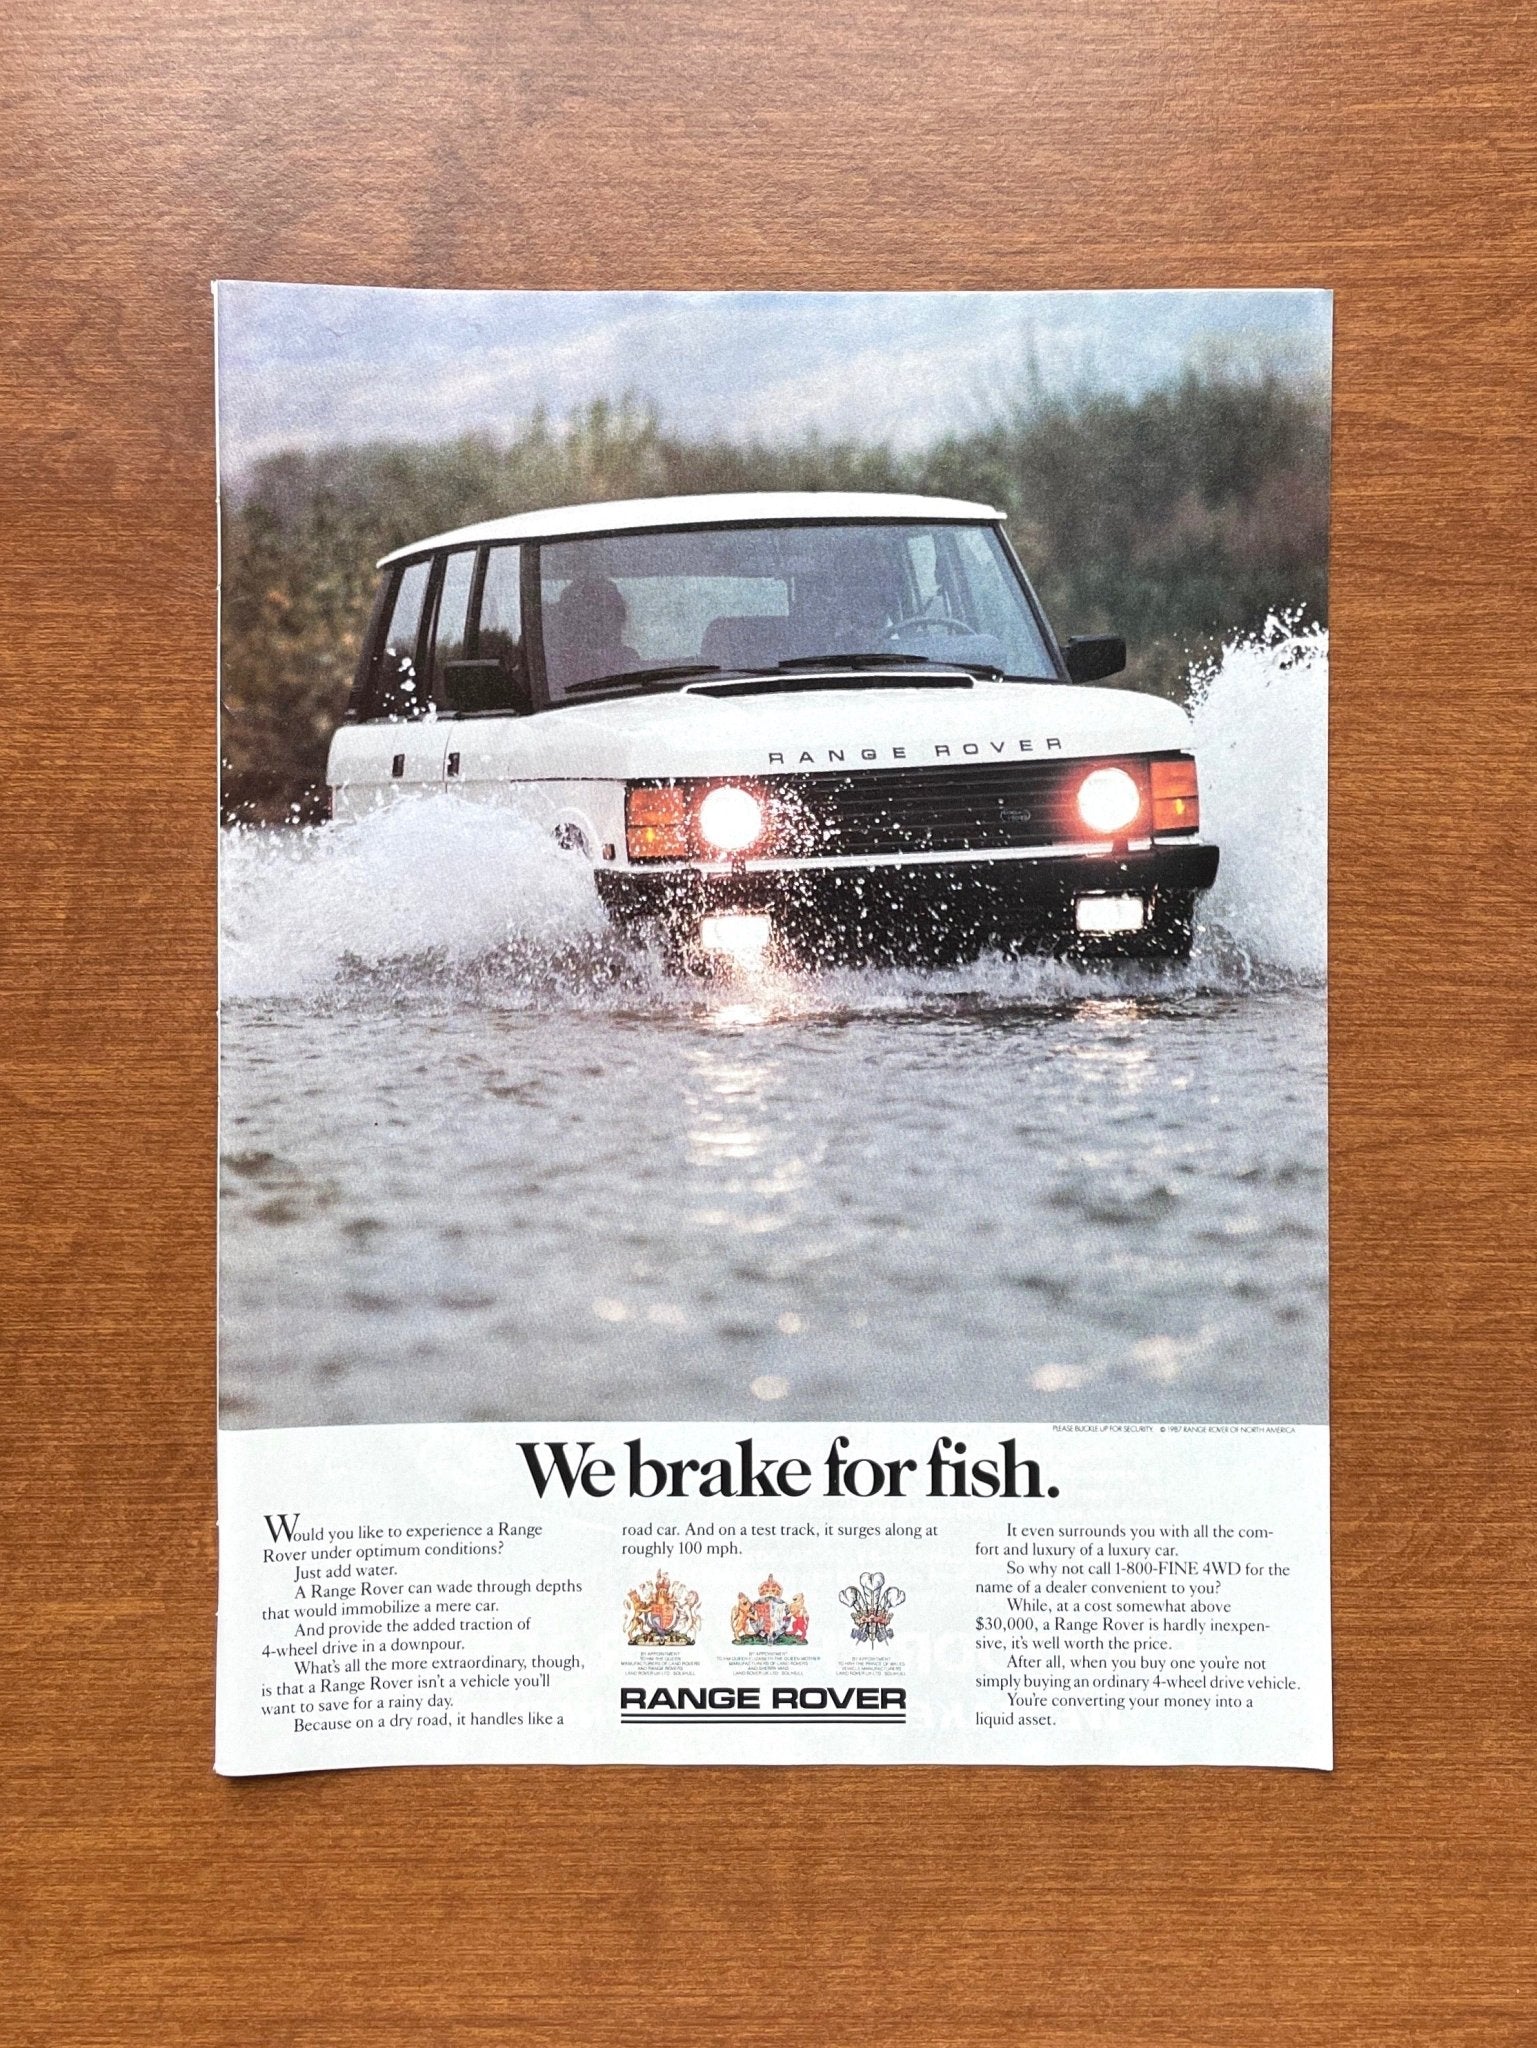 1987 Range Rover "We brake for fish." Advertisement